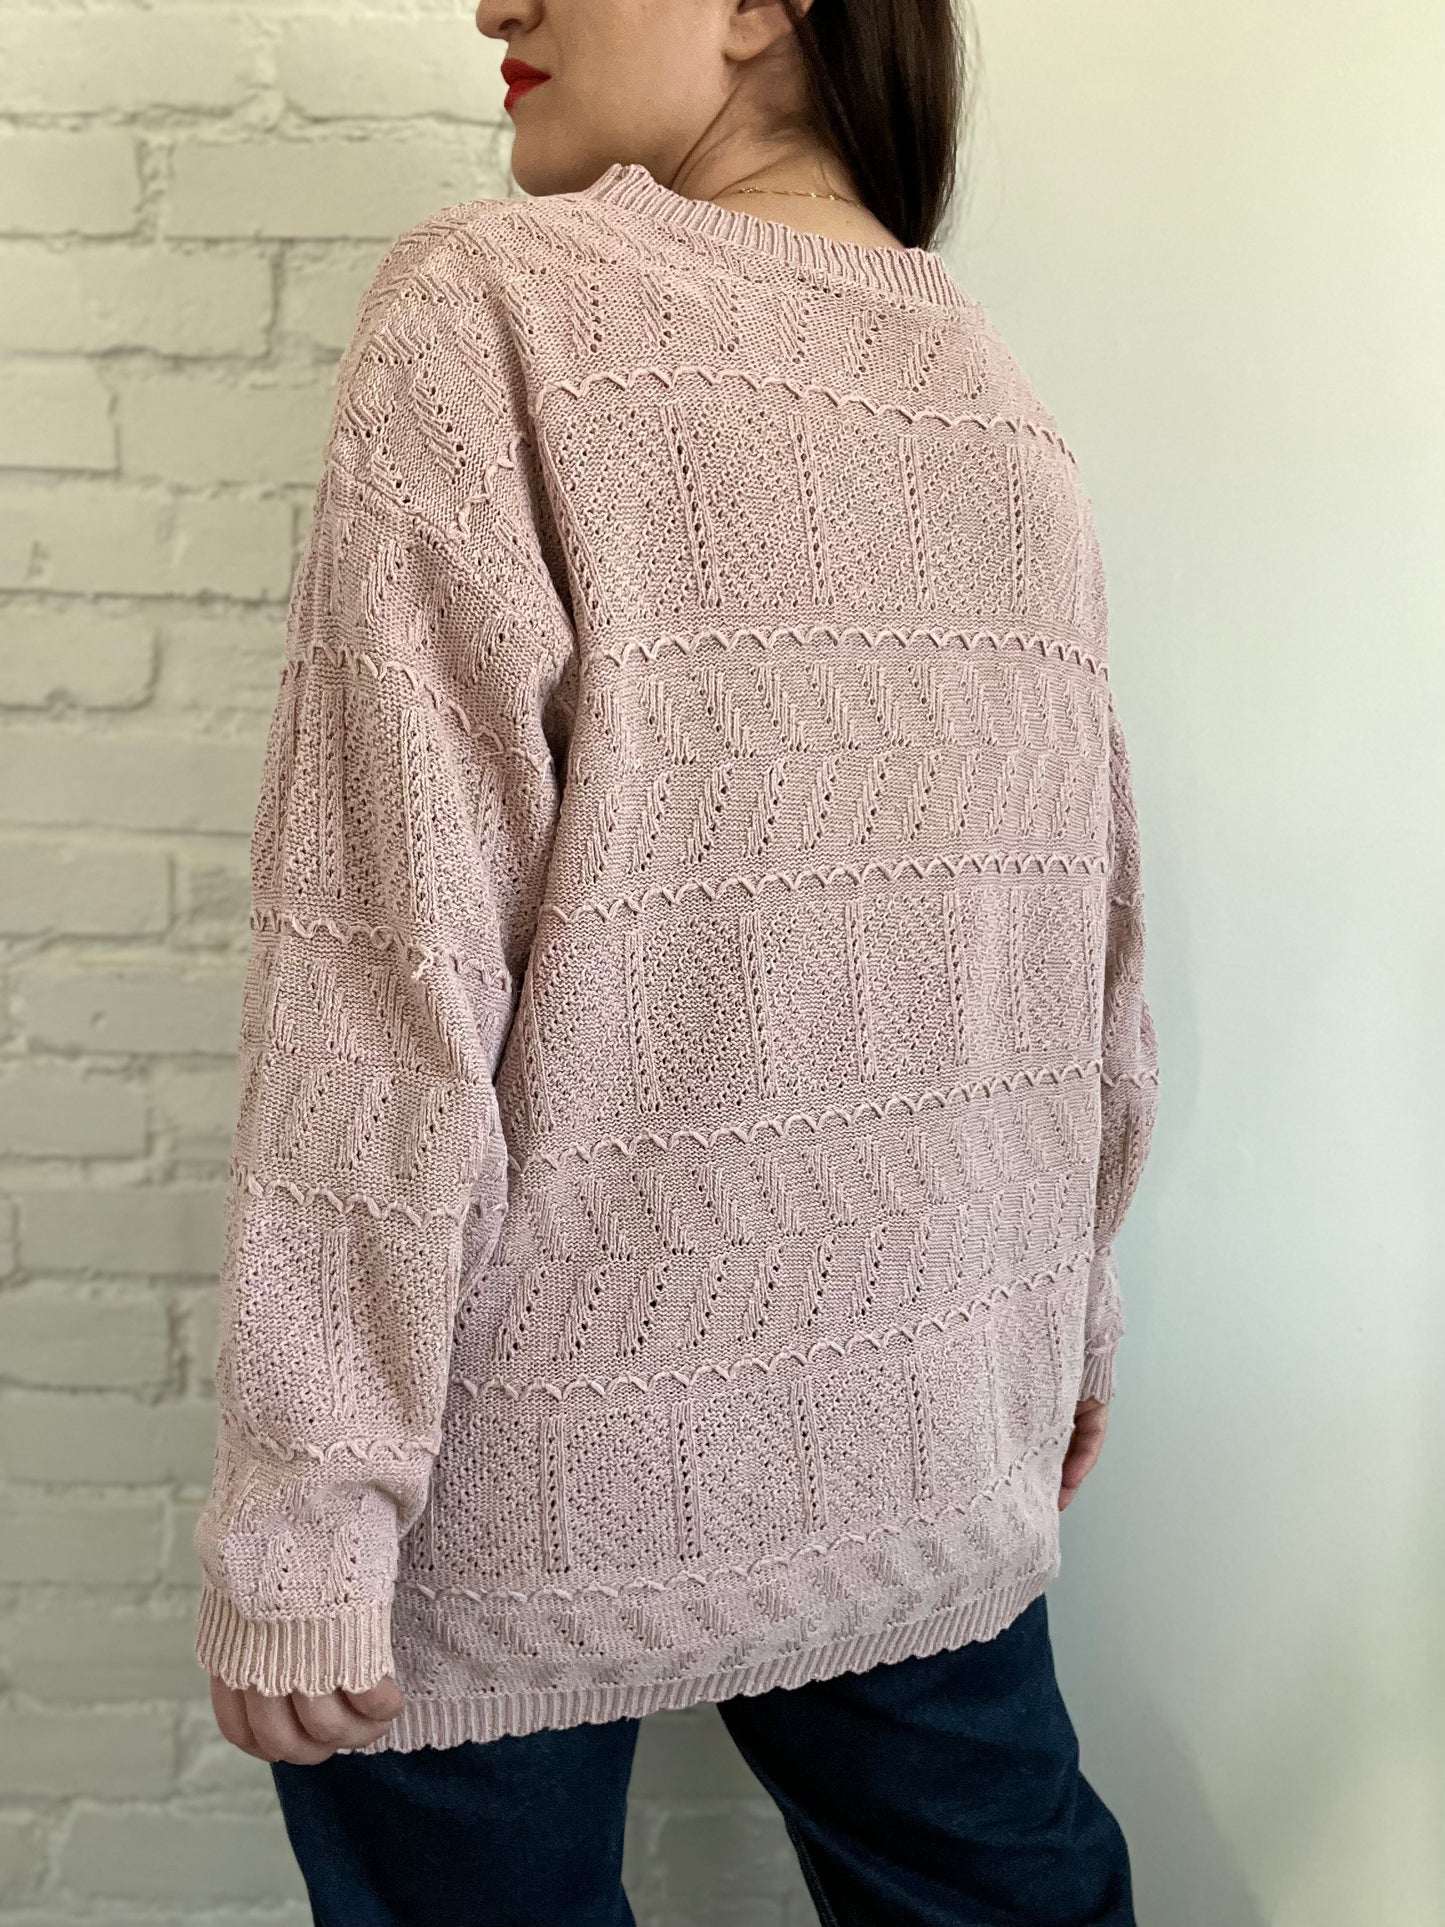 Blush Pink Crochet Sweater - XL